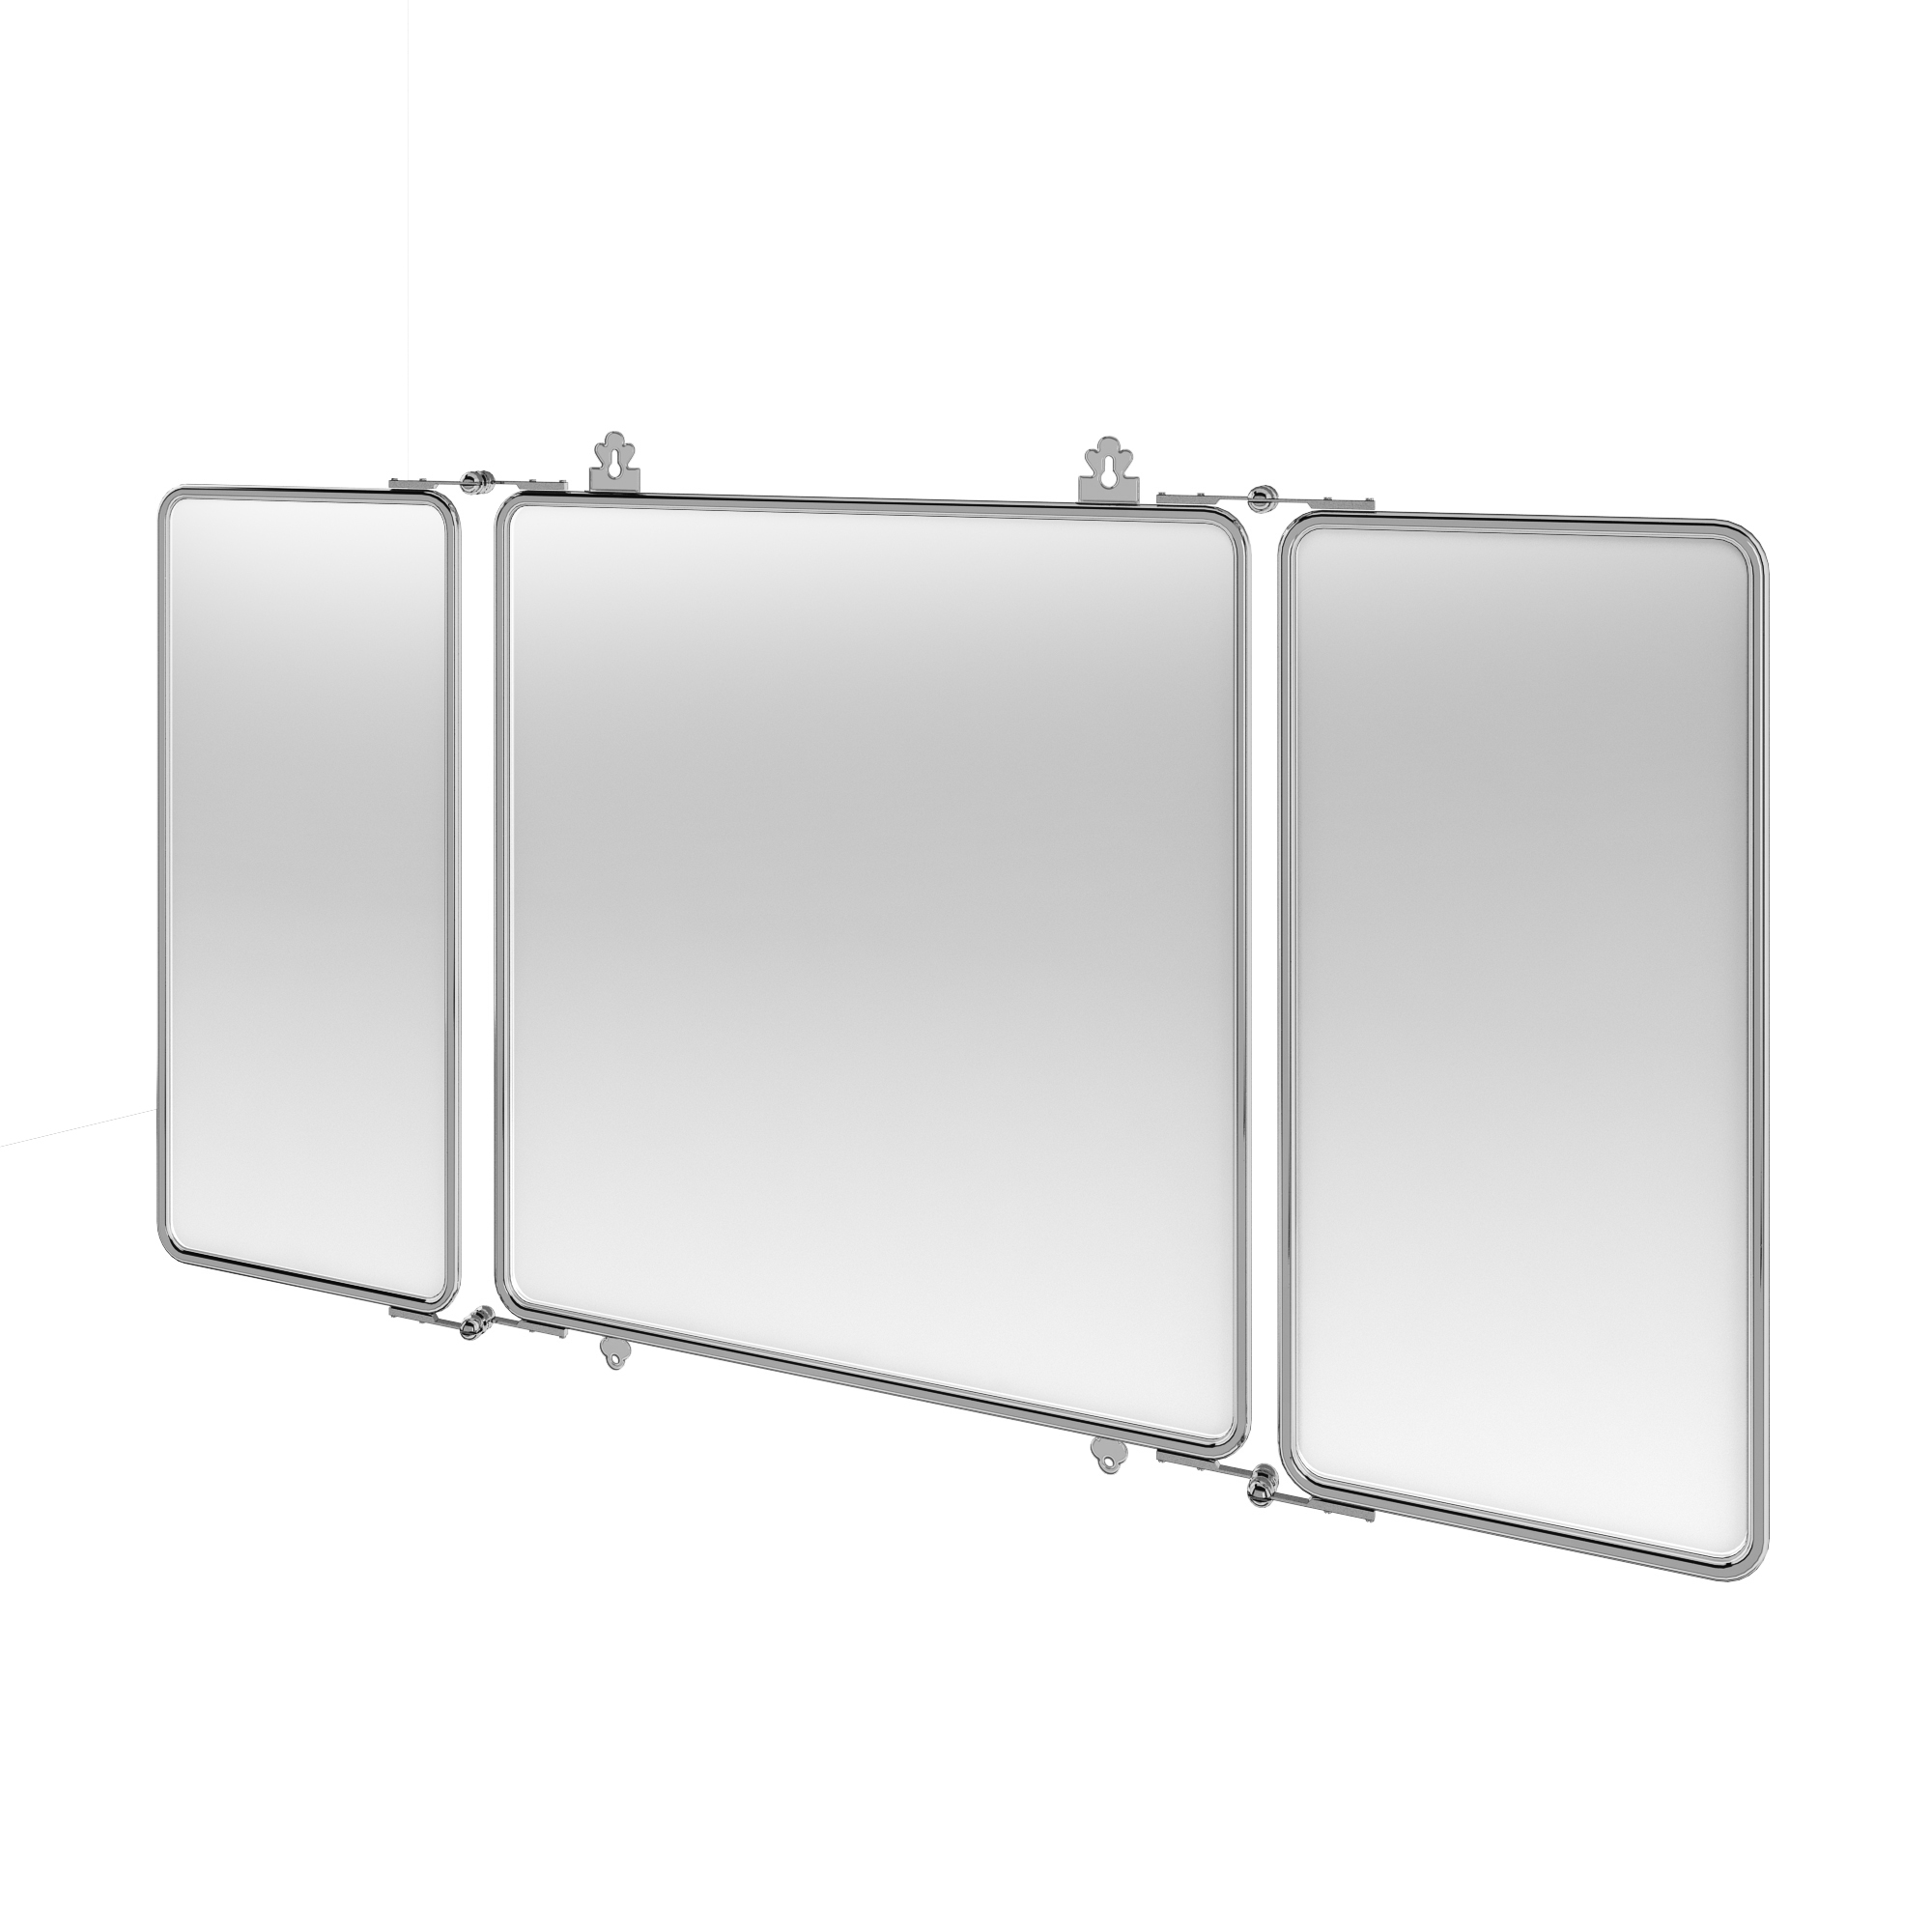 Arcade Three fold bathroom mirror with chrome plated brass frame